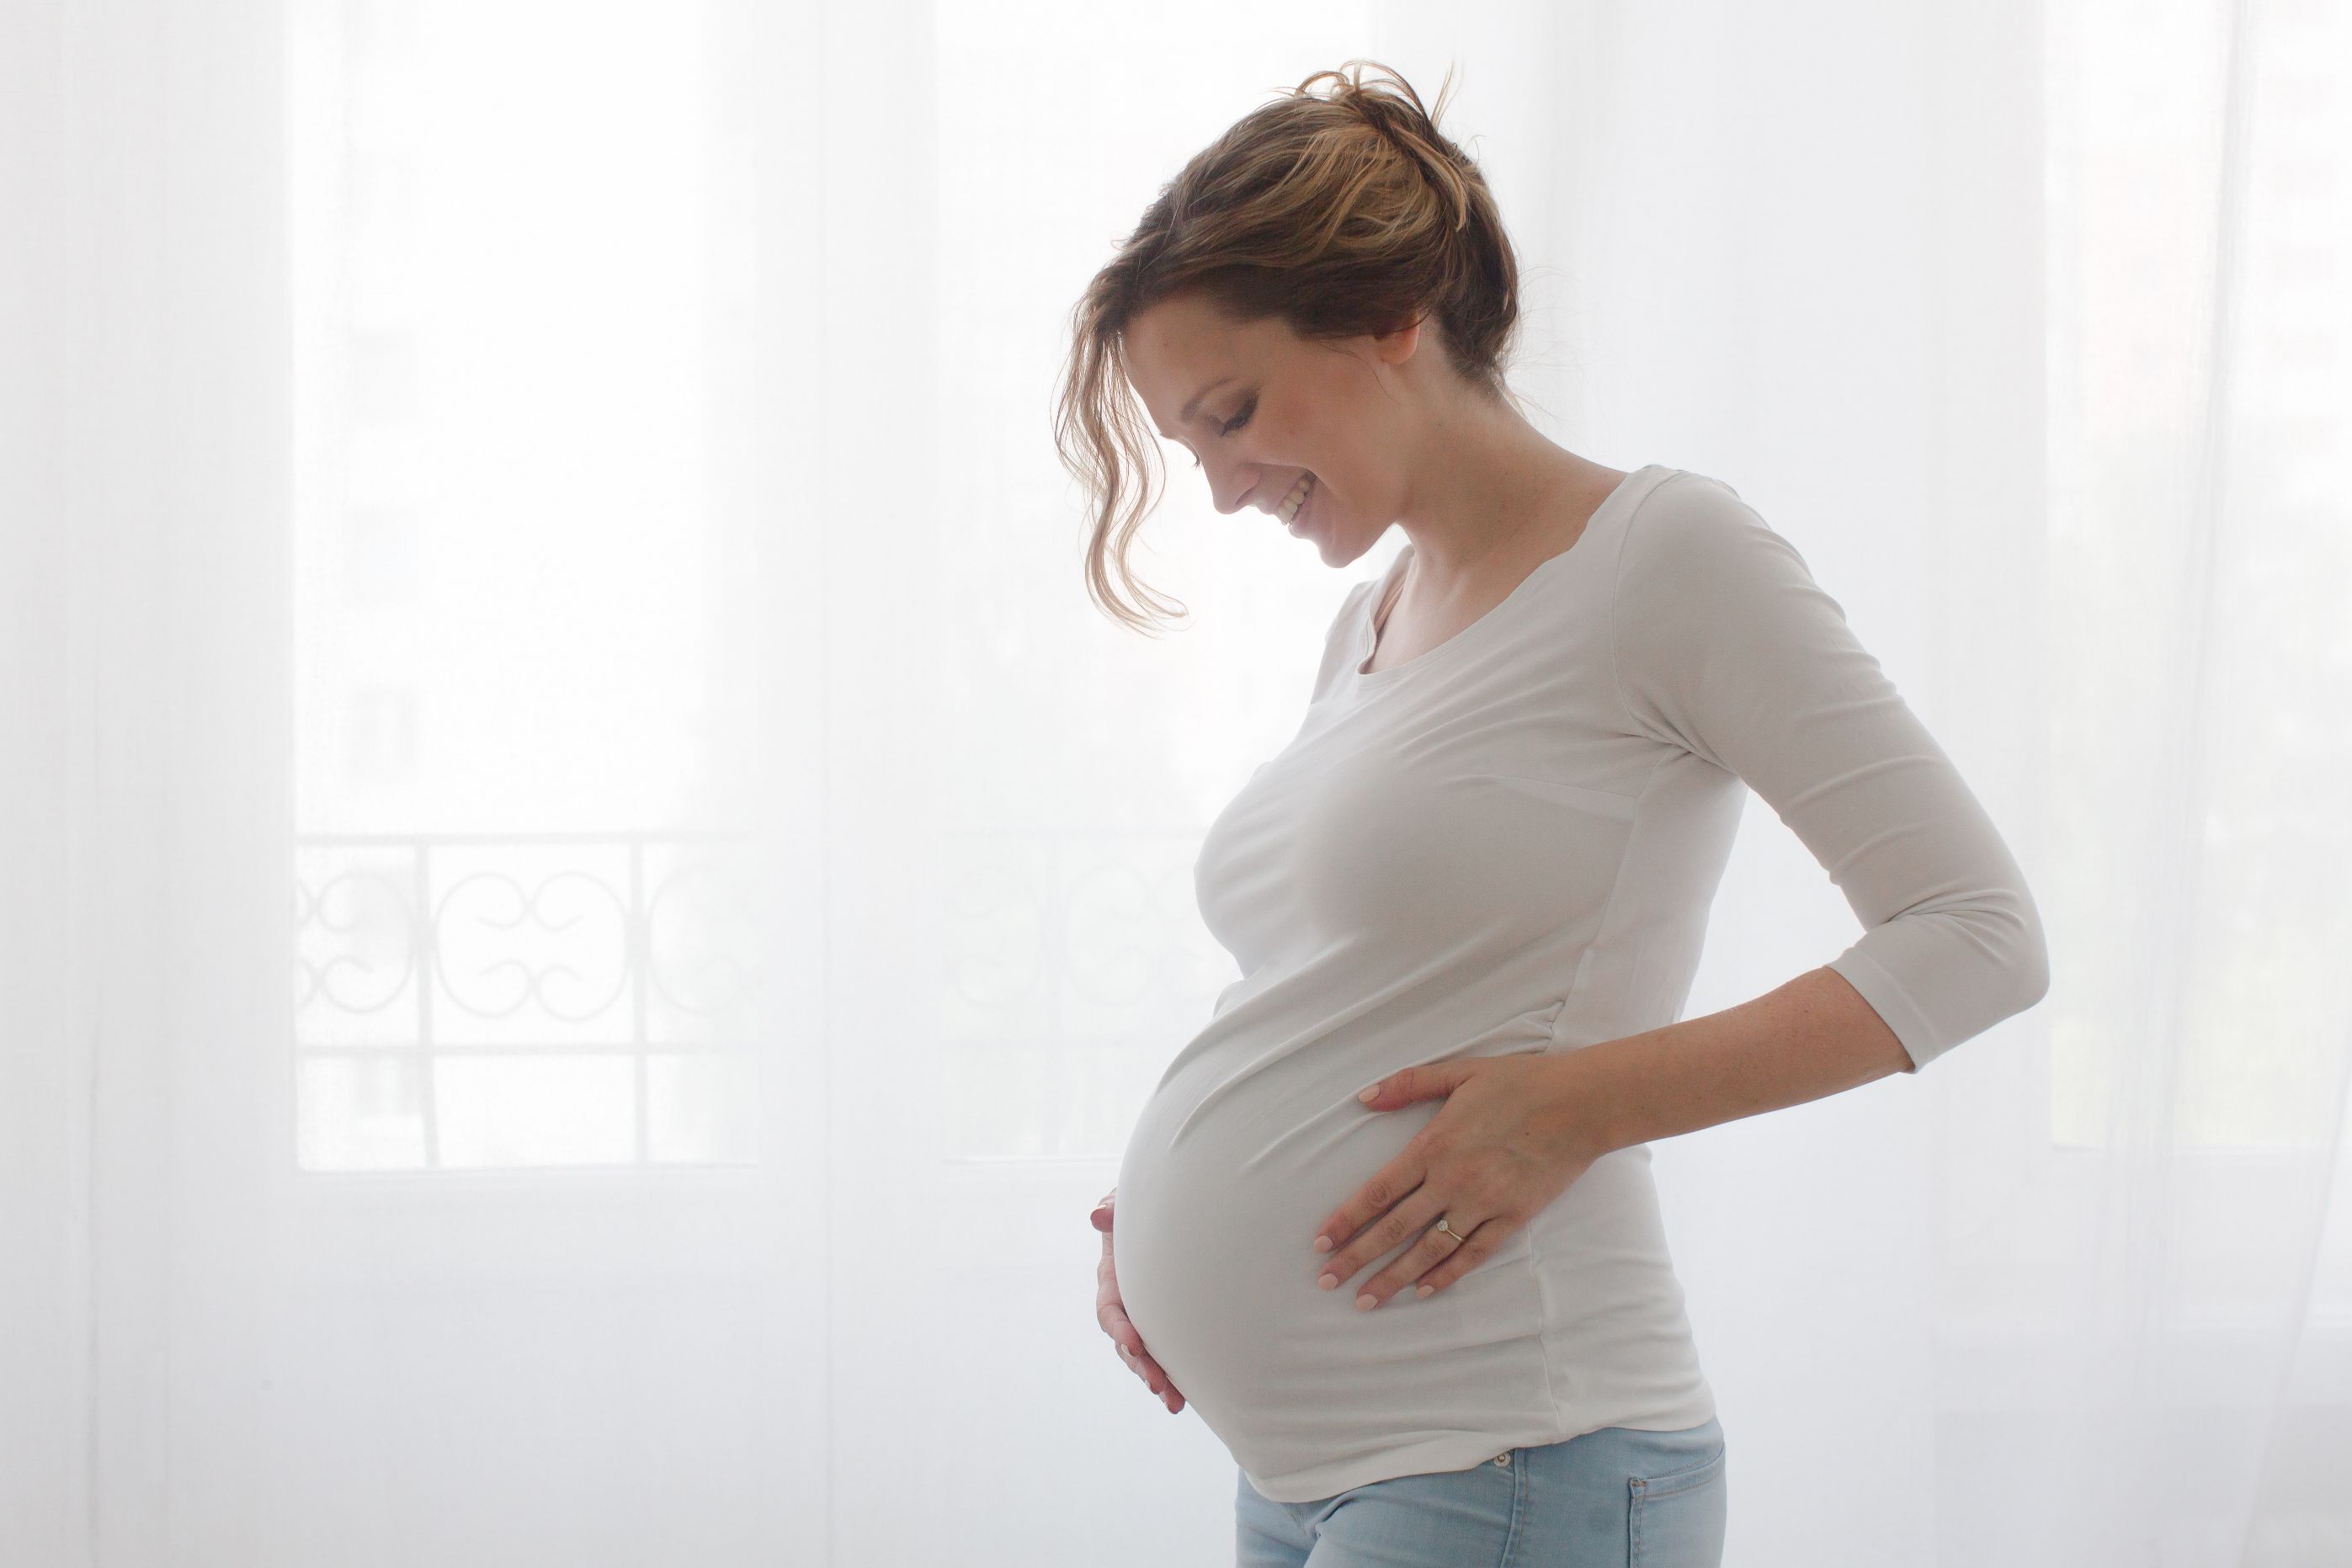 Periodontitis & pregnancy